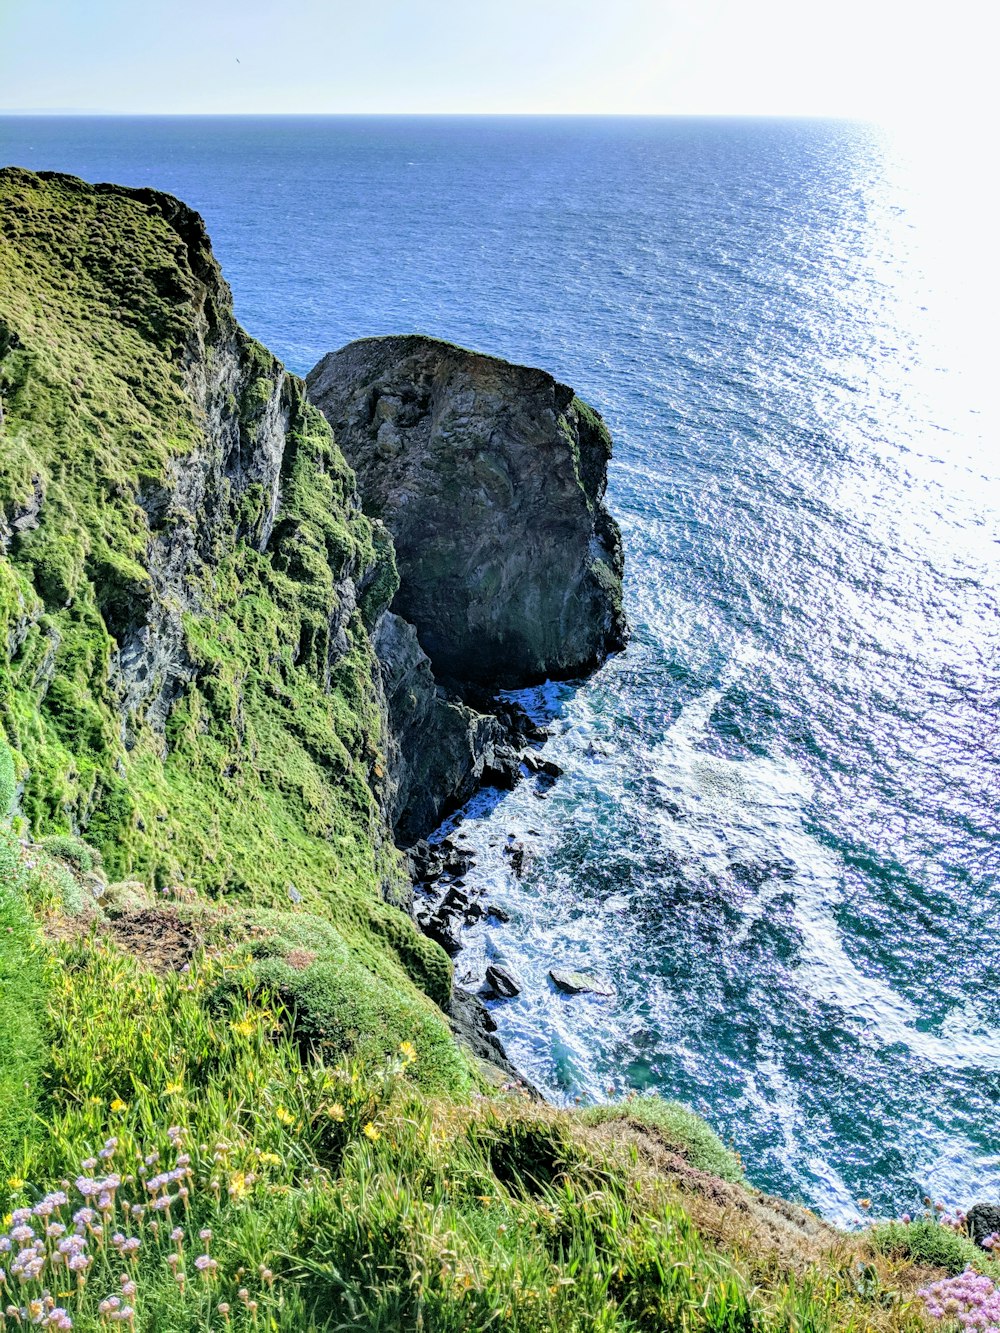 grassy cliff during daytime